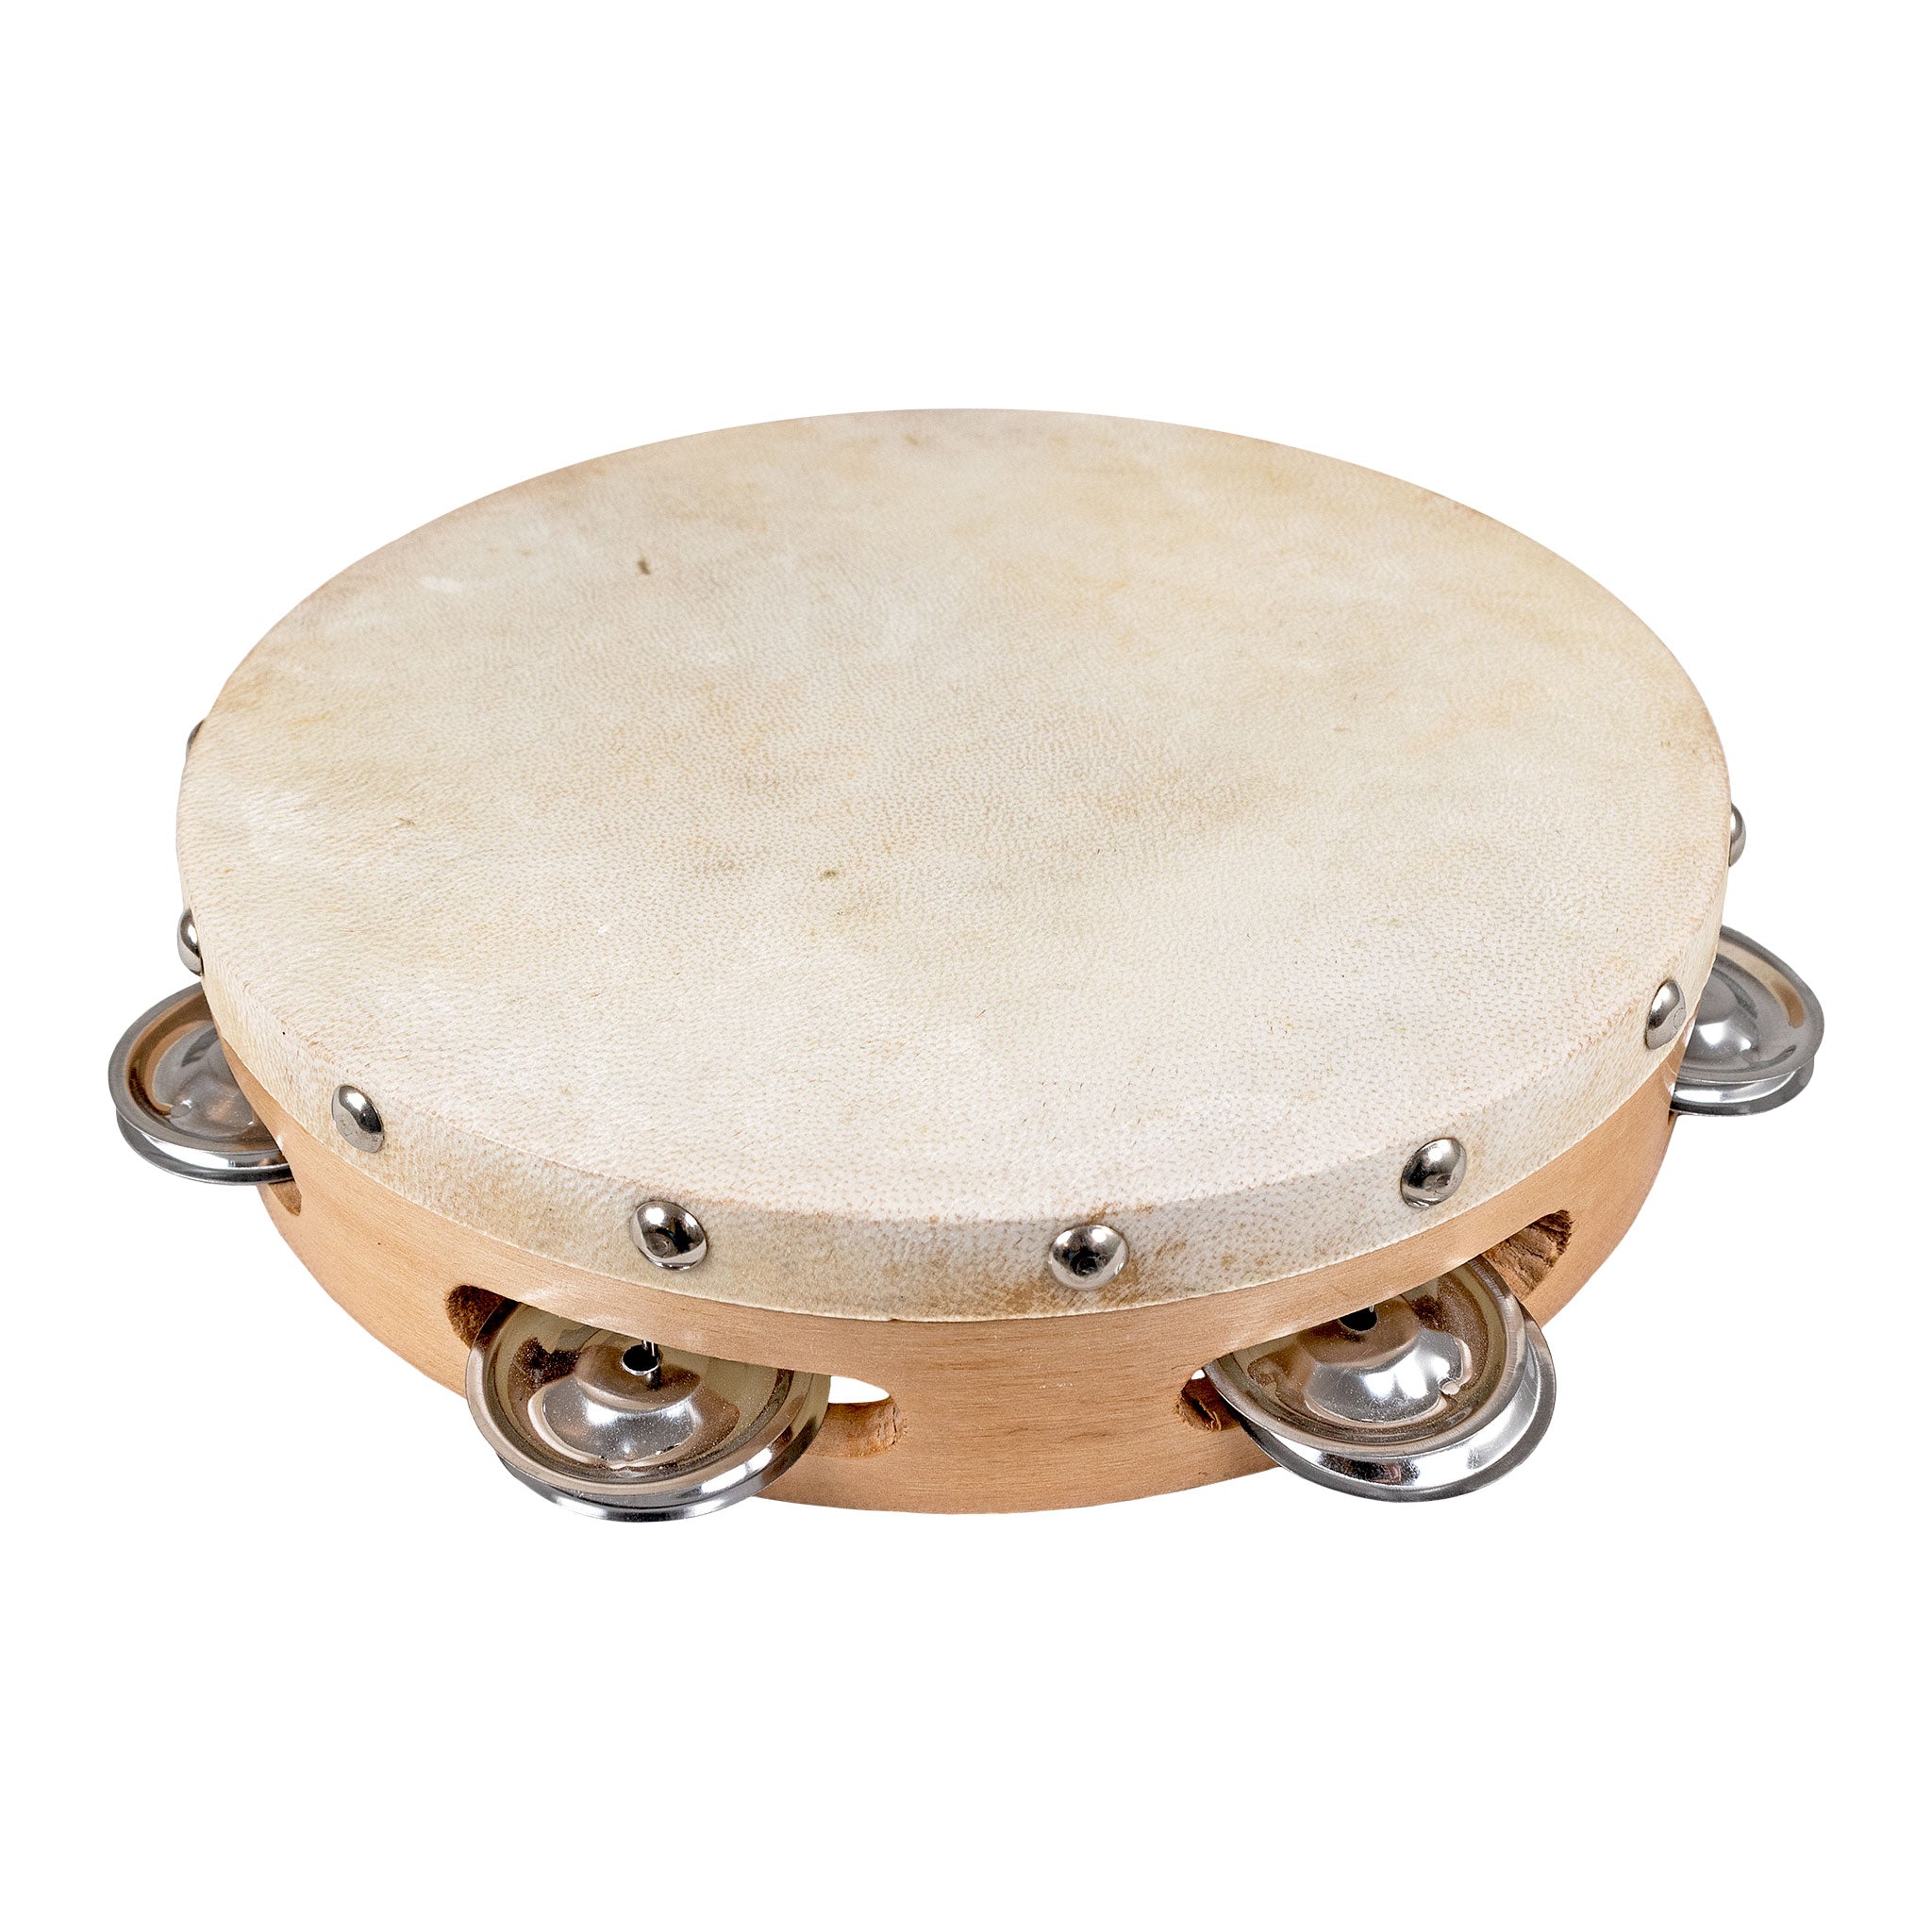 Percussion Plus wood shell tambour - Chamberlain Music